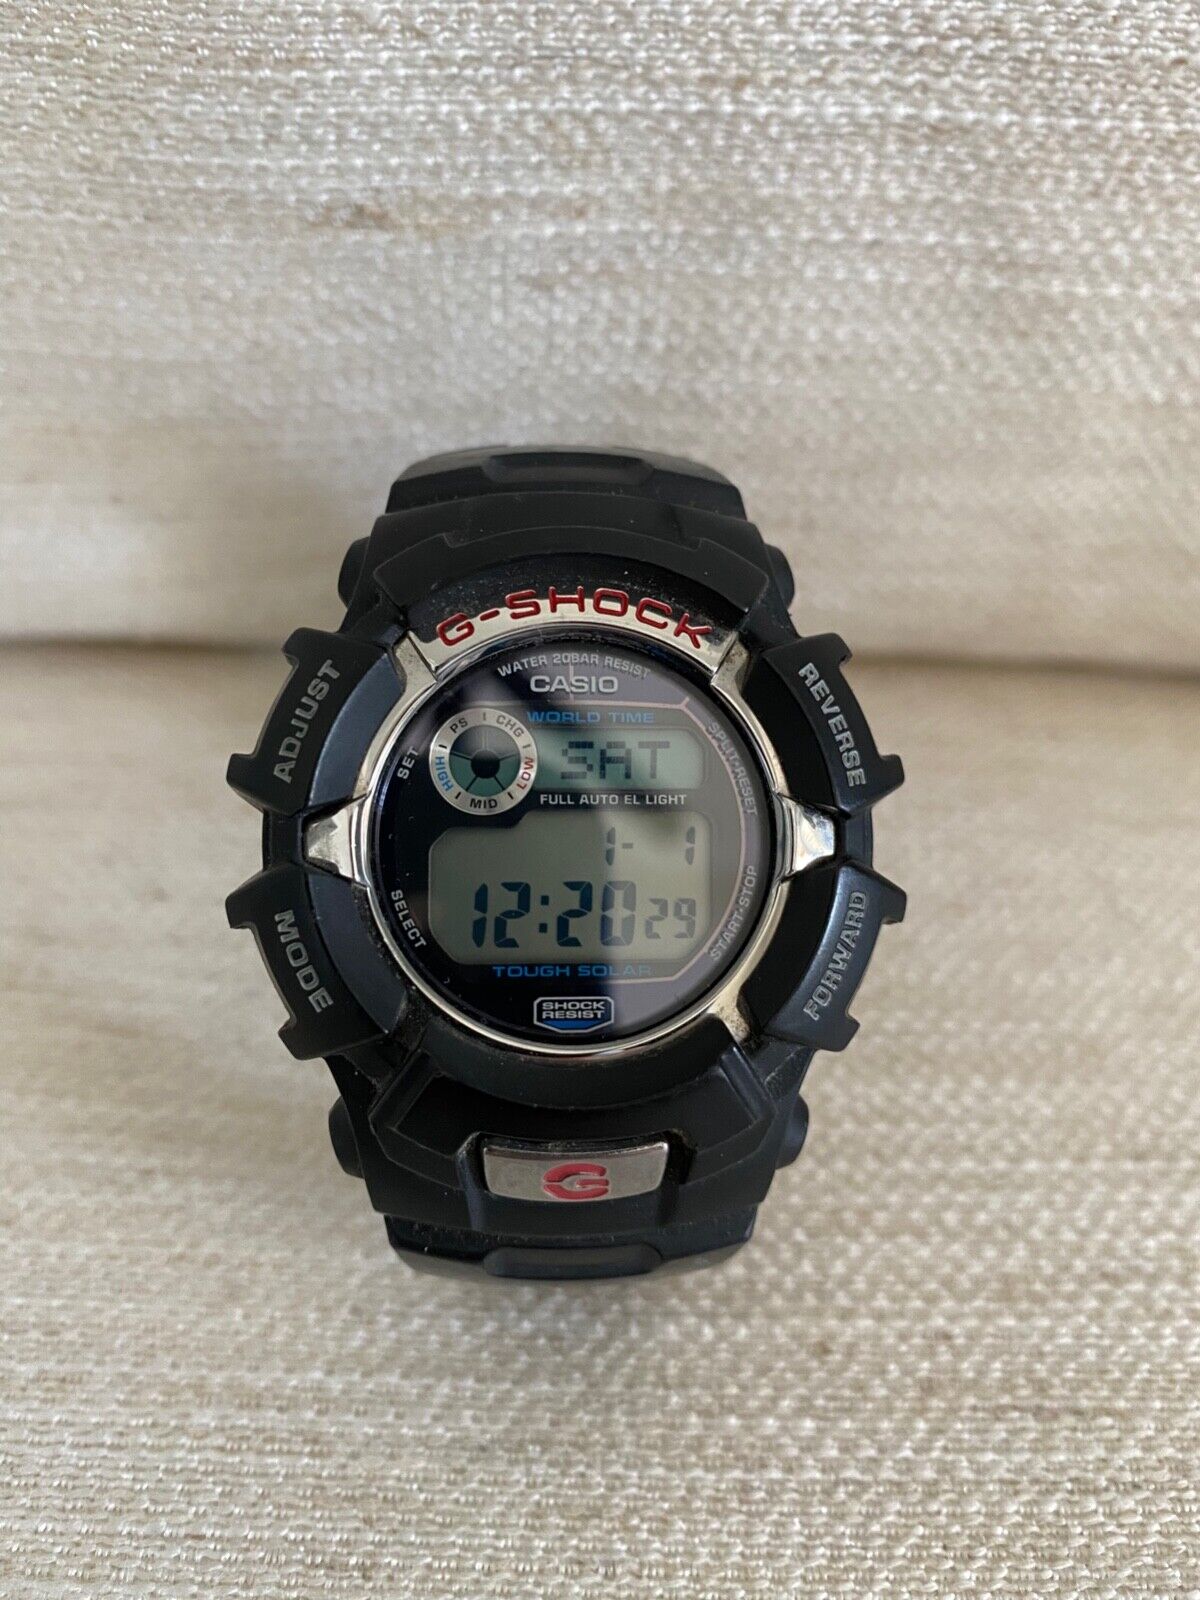 G-Shock Watch - Excellent Condition